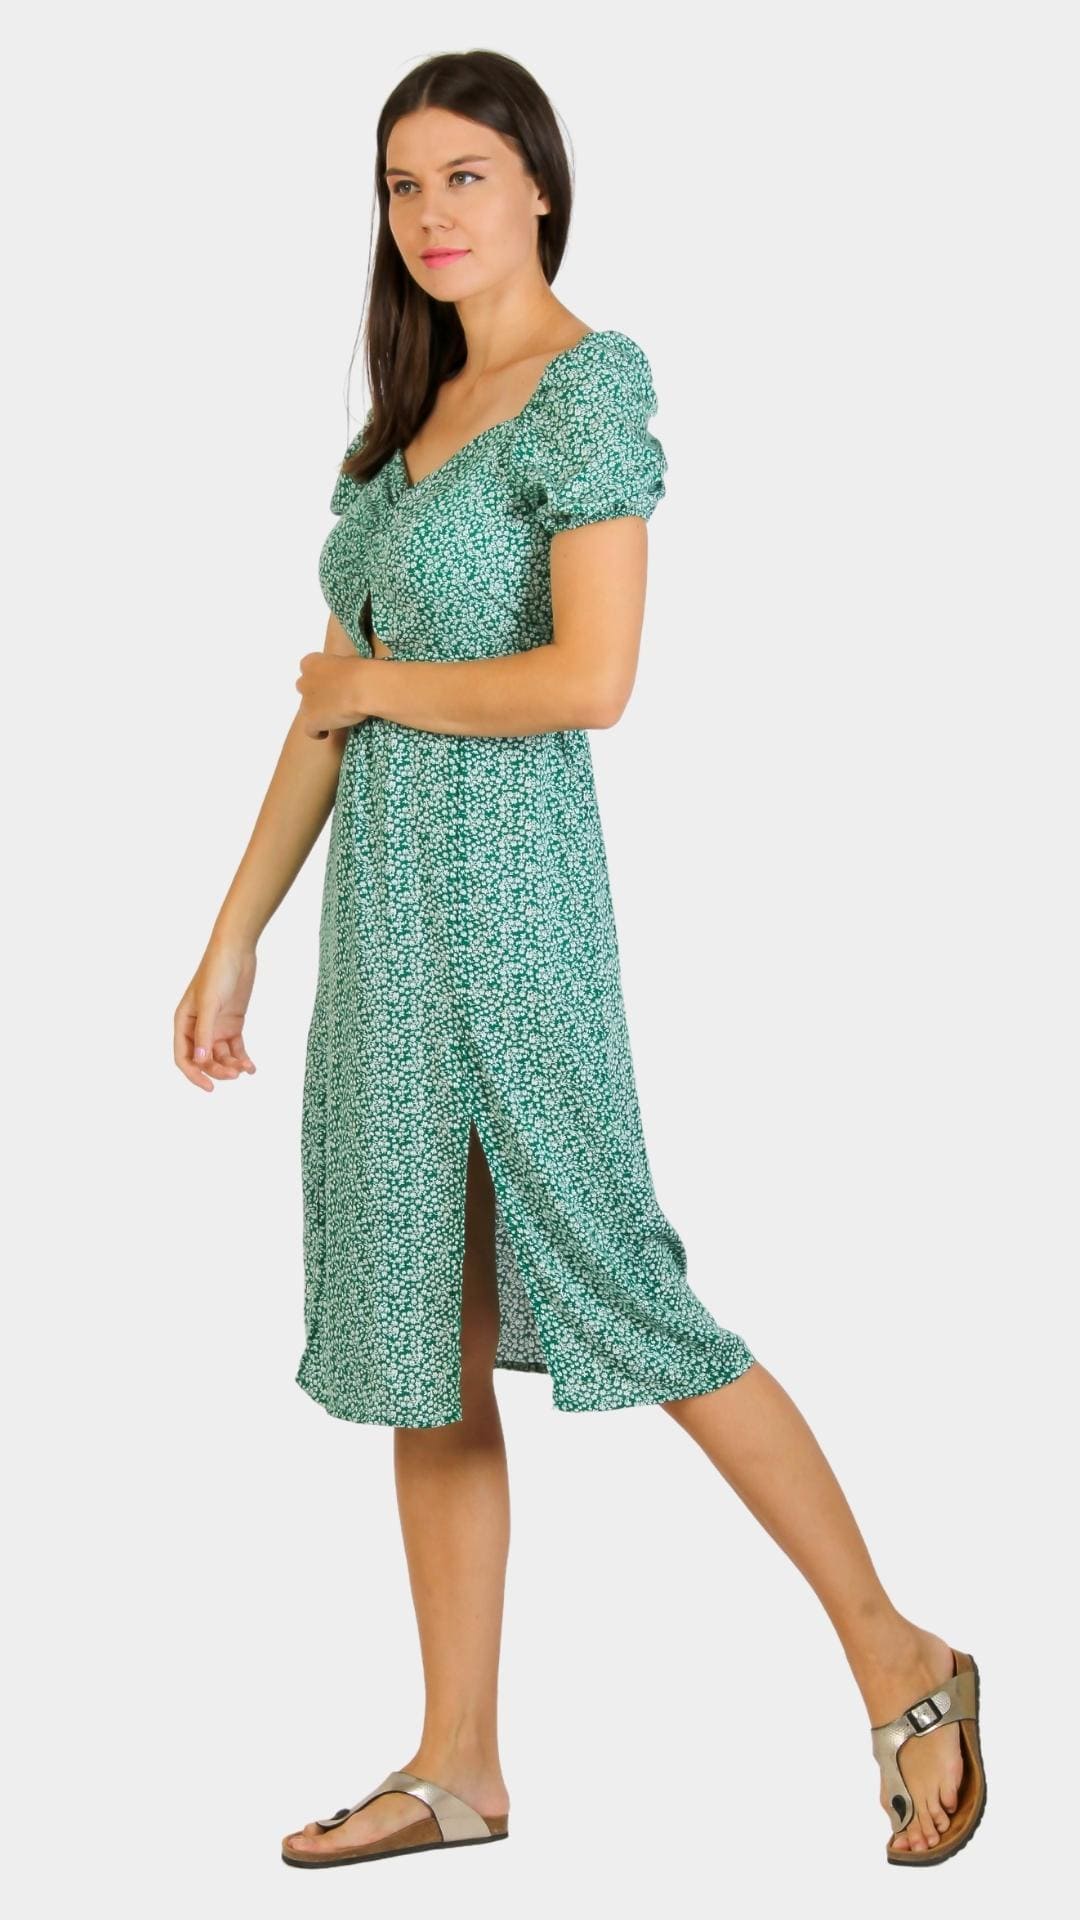 Short-Sleeve Floral Dress with Slit